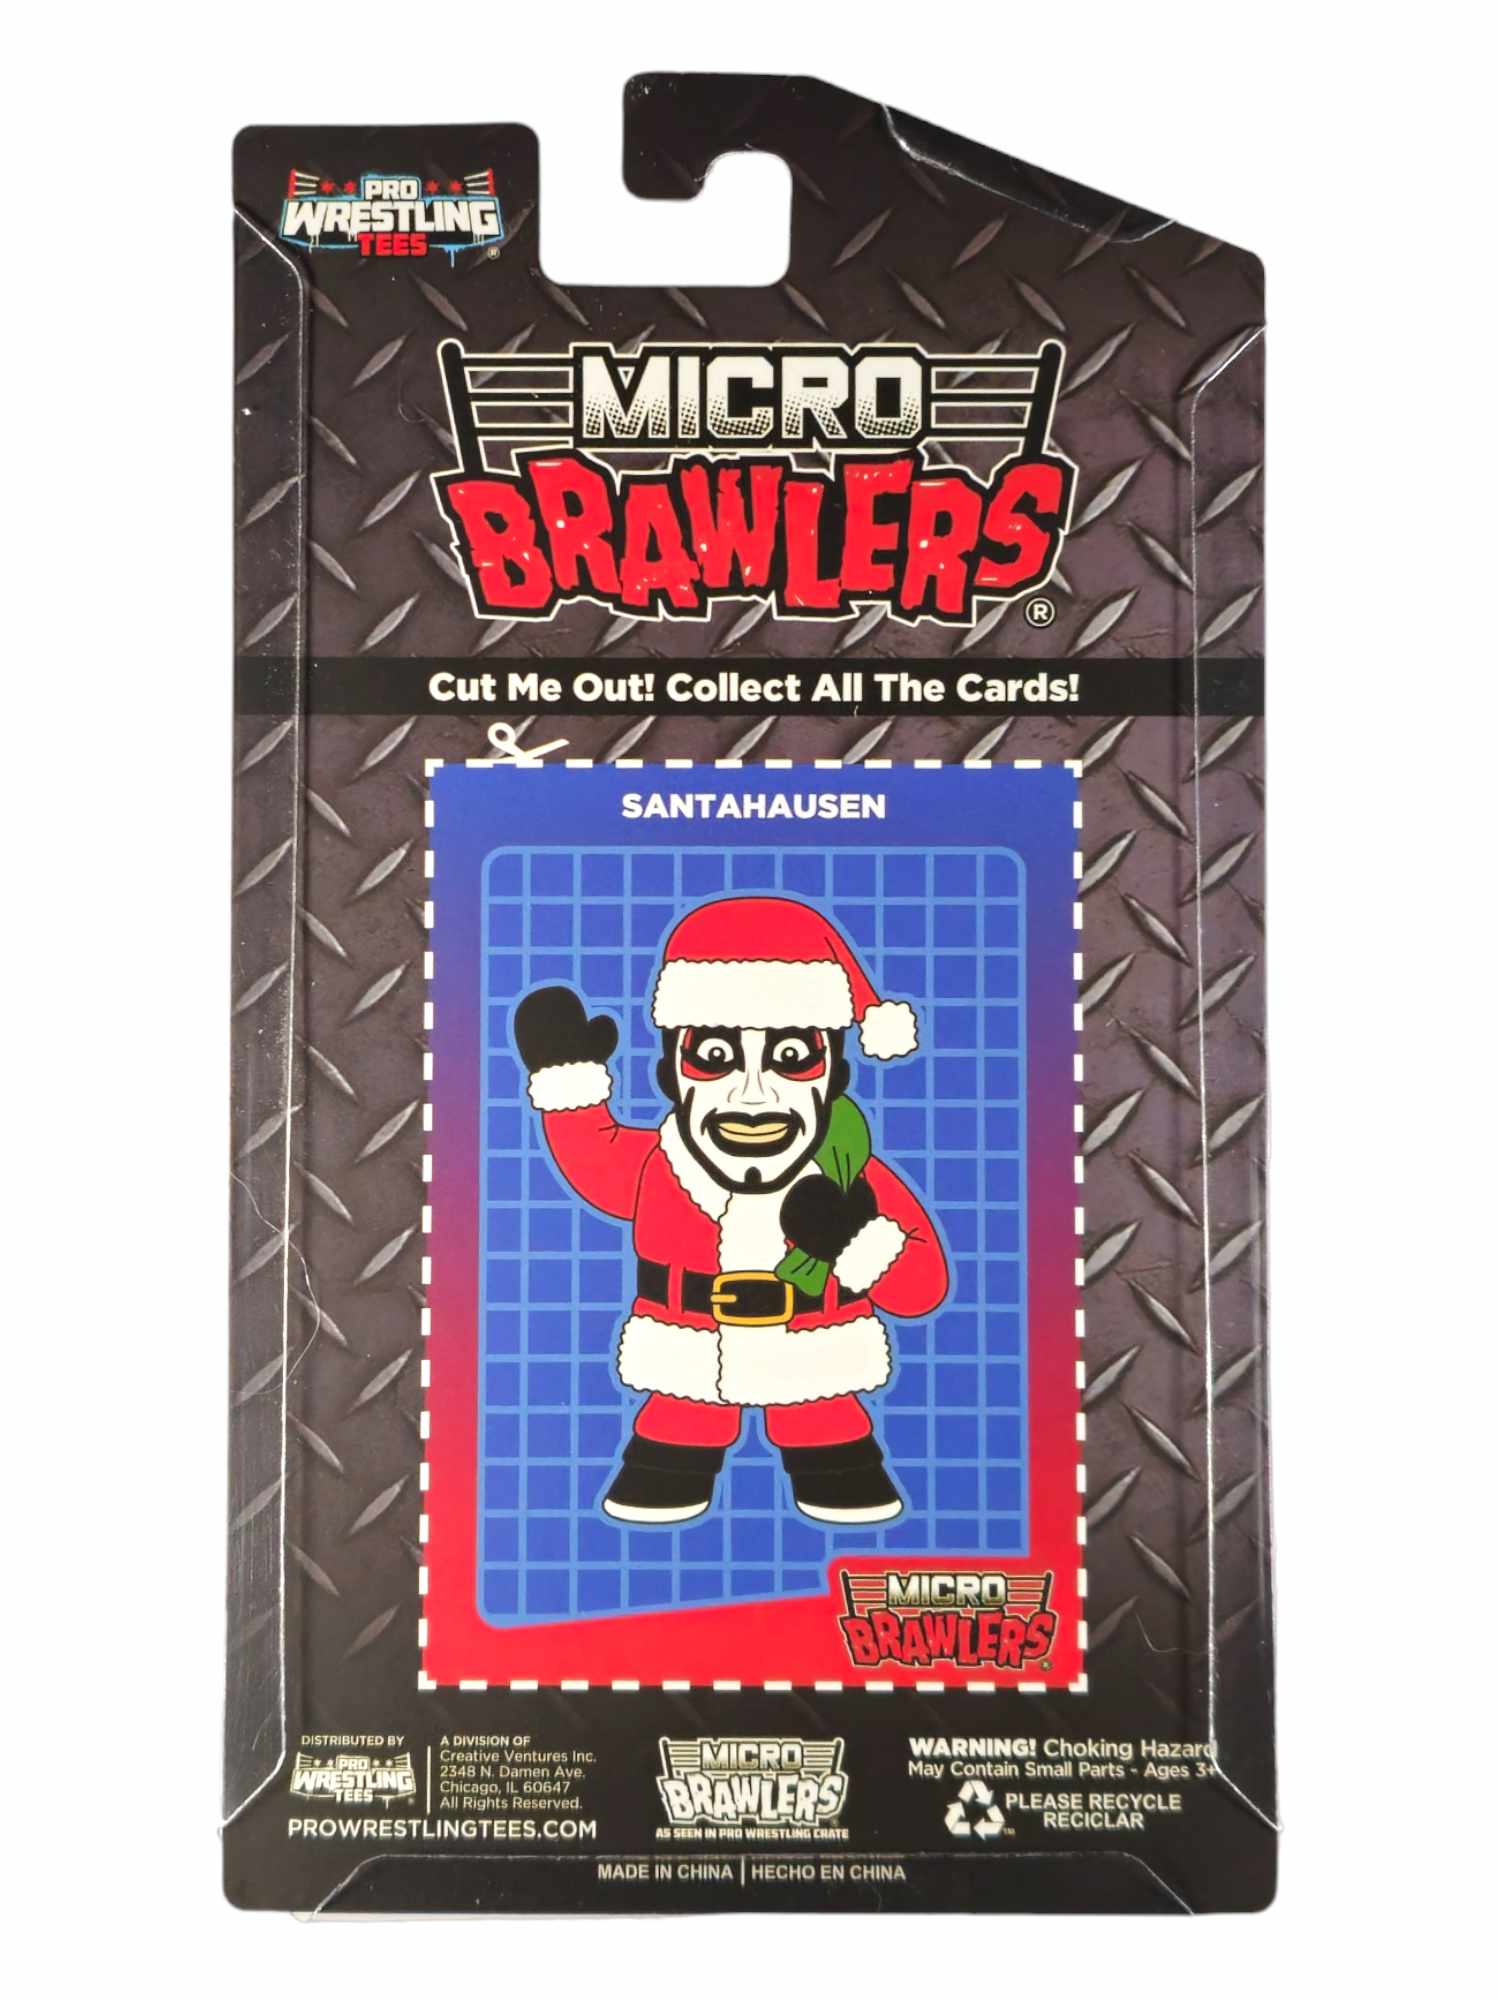 Micro Brawlers from prowrestlingtees